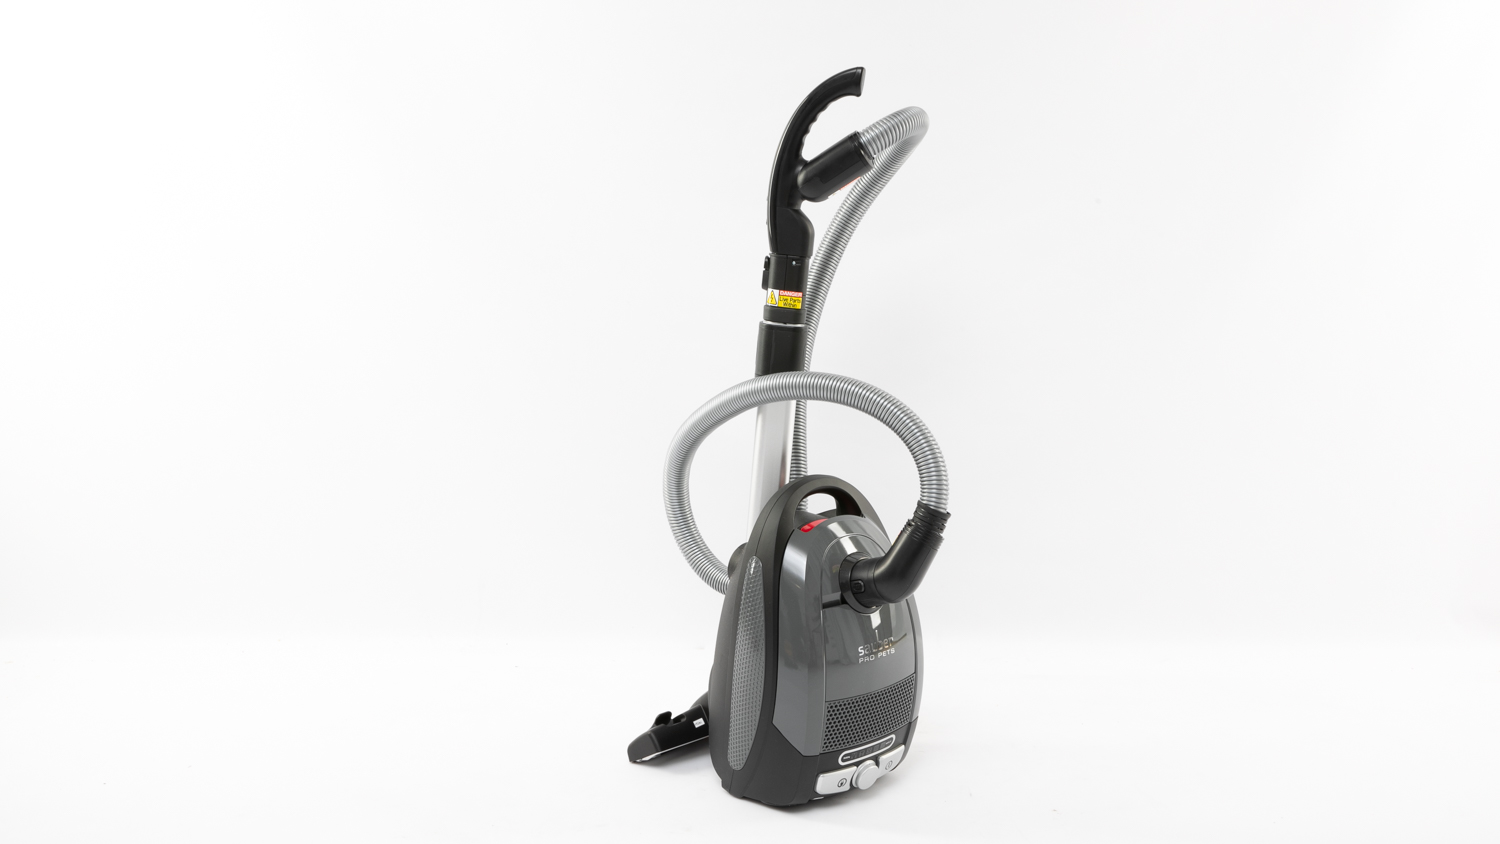 Pros and cons of bagged vs. bagless vacuums | David's Vacuums